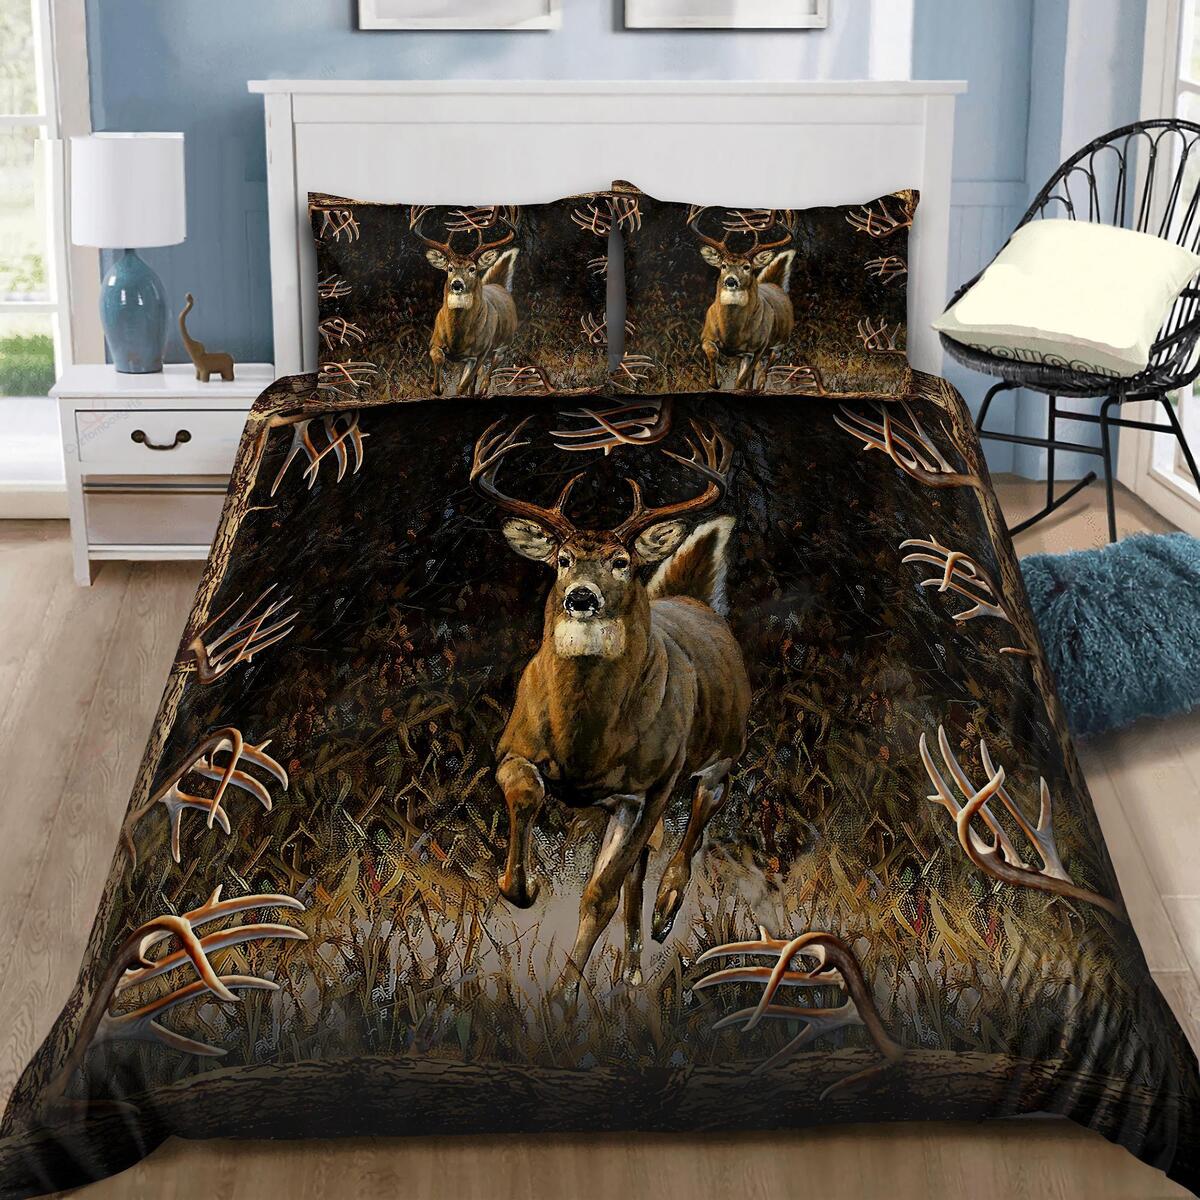 Deer Hunting In The Forest quilt Bedding Set - deer camo brown Comforter Set Twin Queen King Size